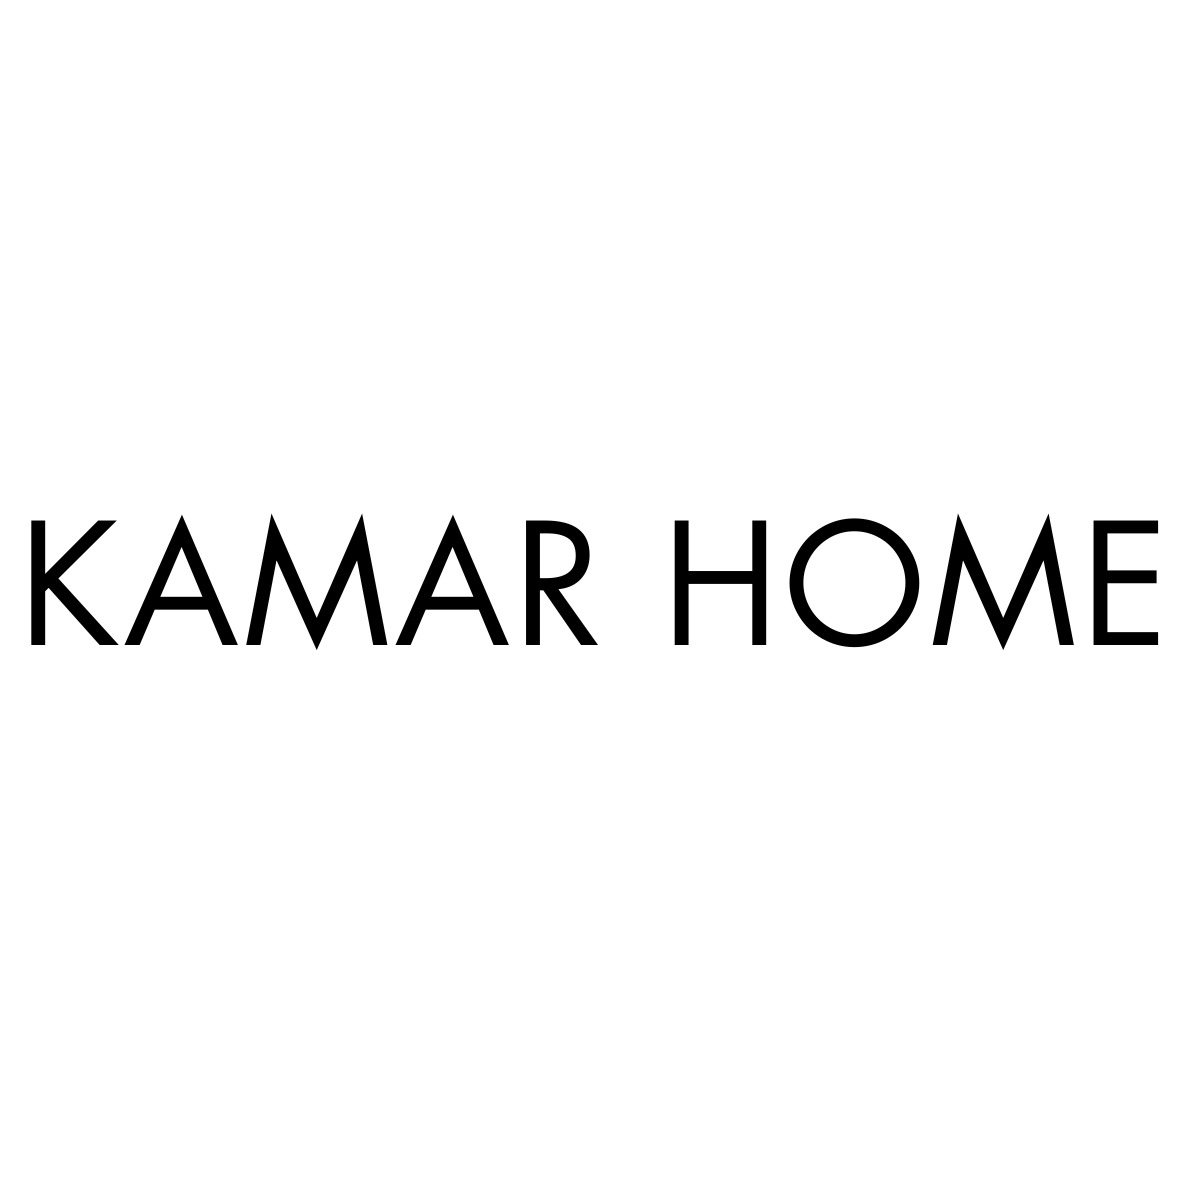 KAMAR HOME